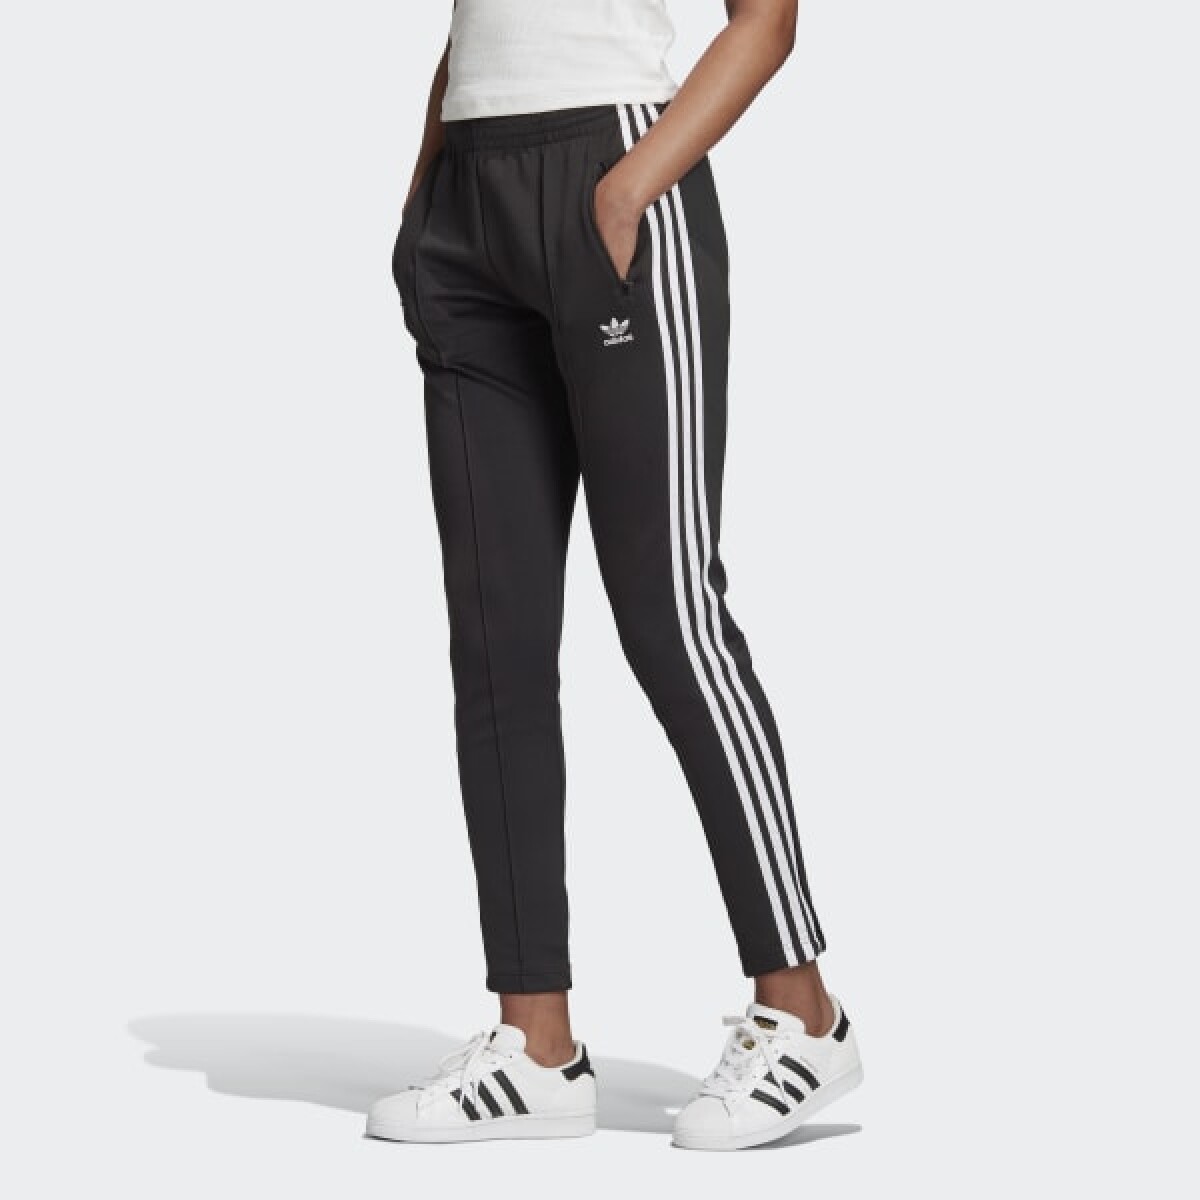 Pantalon Adidas Superstar Moda Dama - S/C 